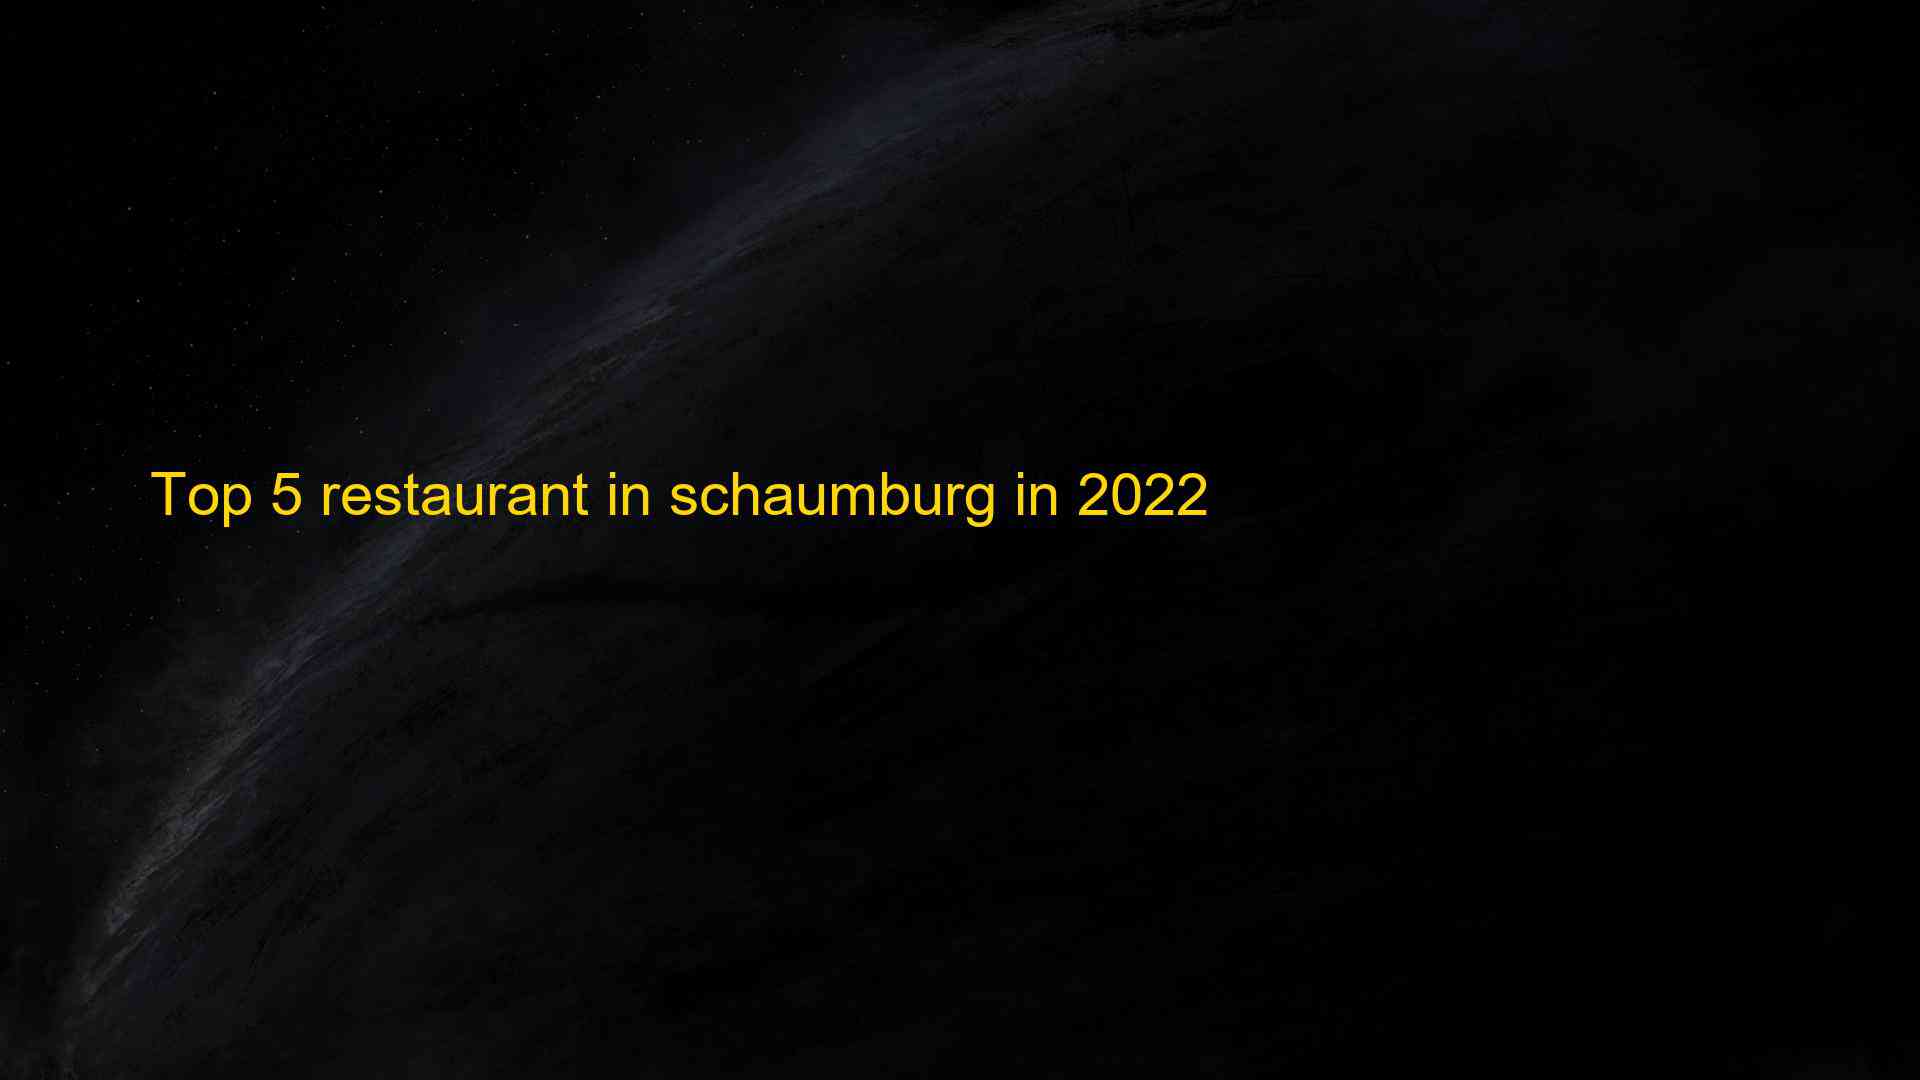 Top 5 restaurant in schaumburg in 2022 1663532136